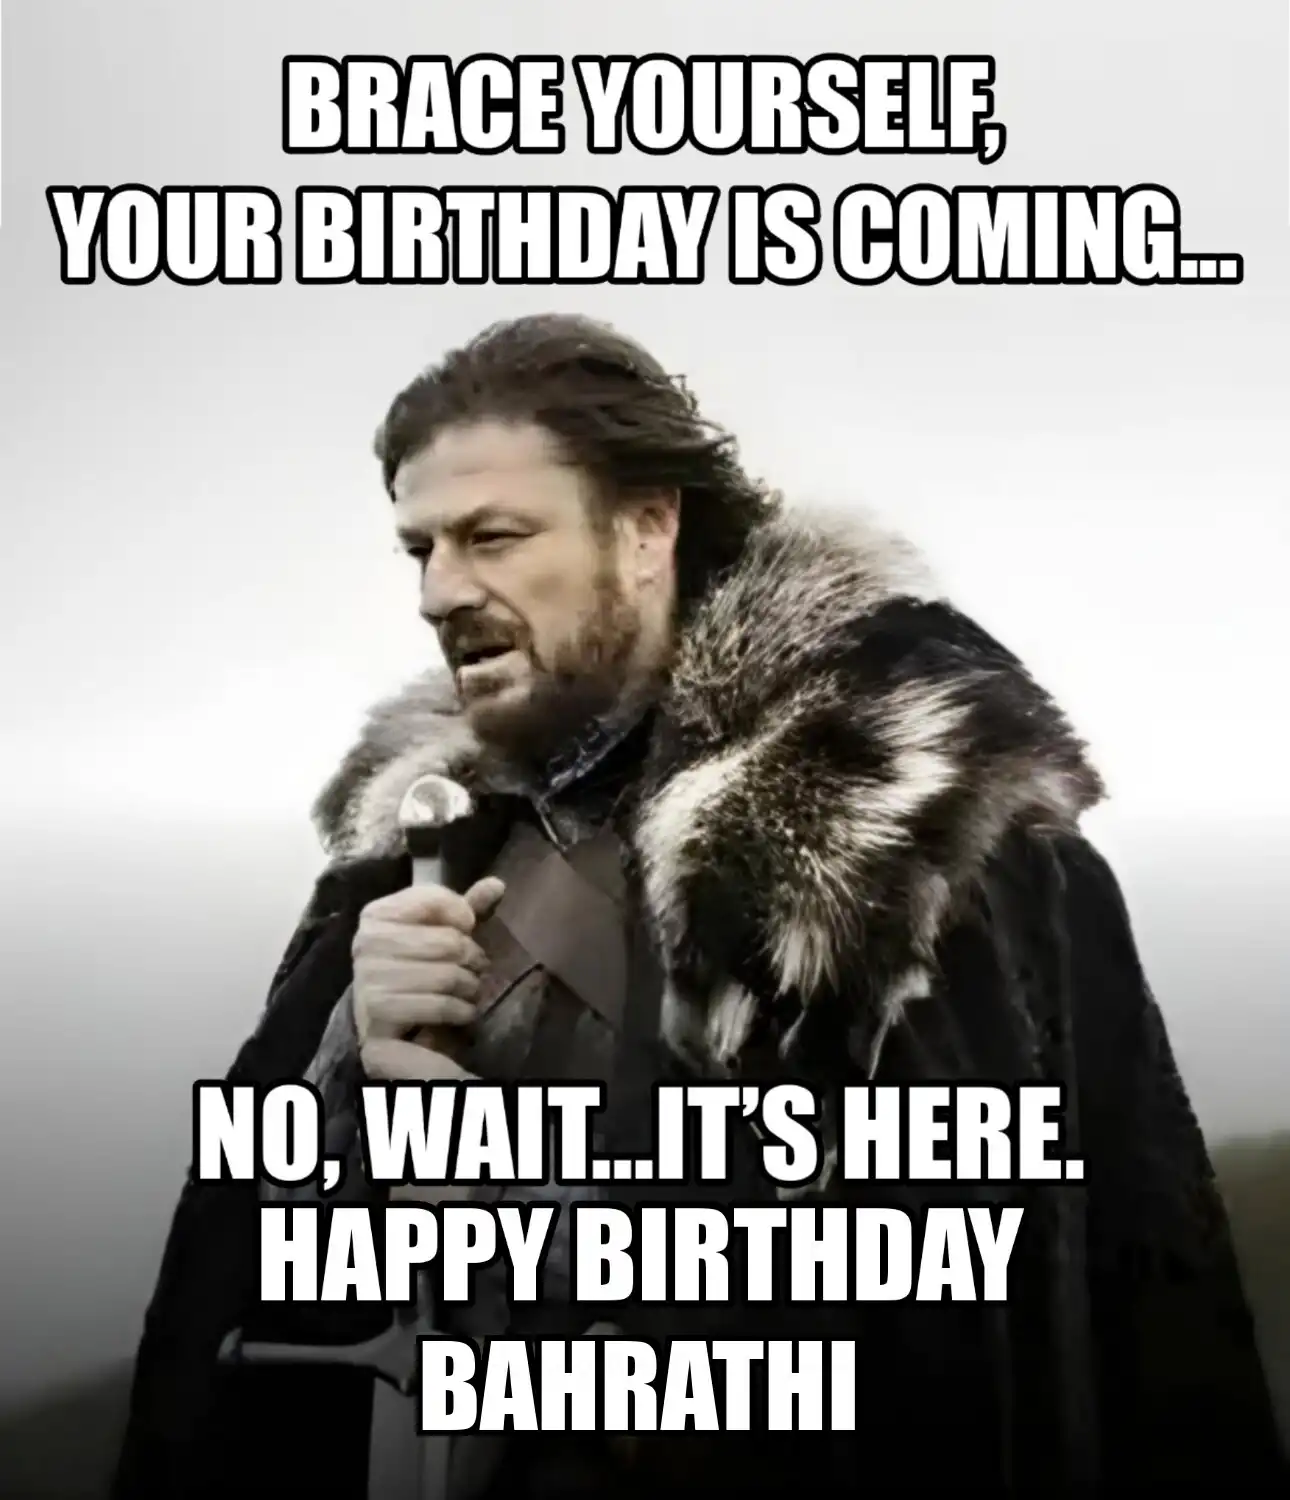 Happy Birthday Bahrathi Brace Yourself Your Birthday Is Coming Meme